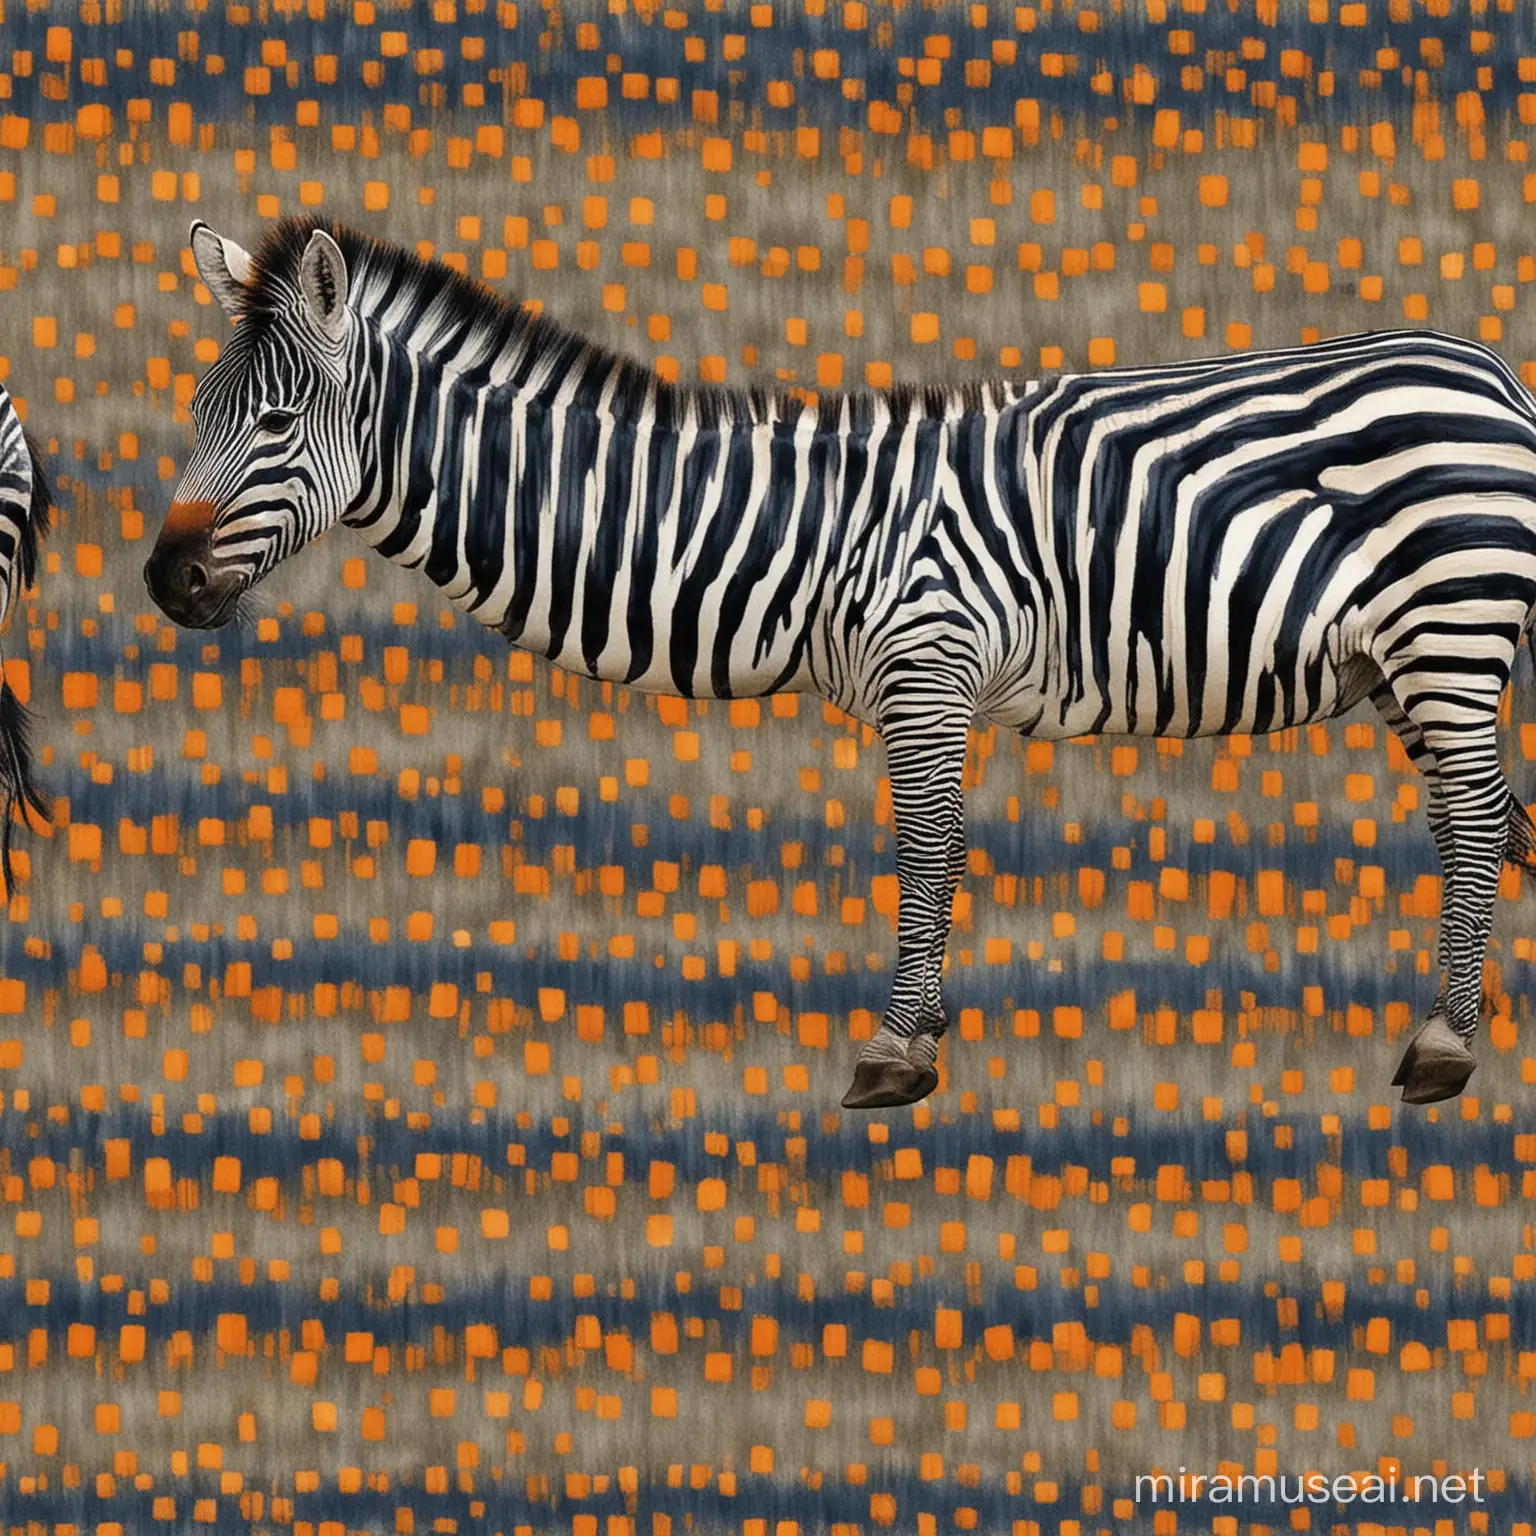 Zebra with dark blue and orange stripes